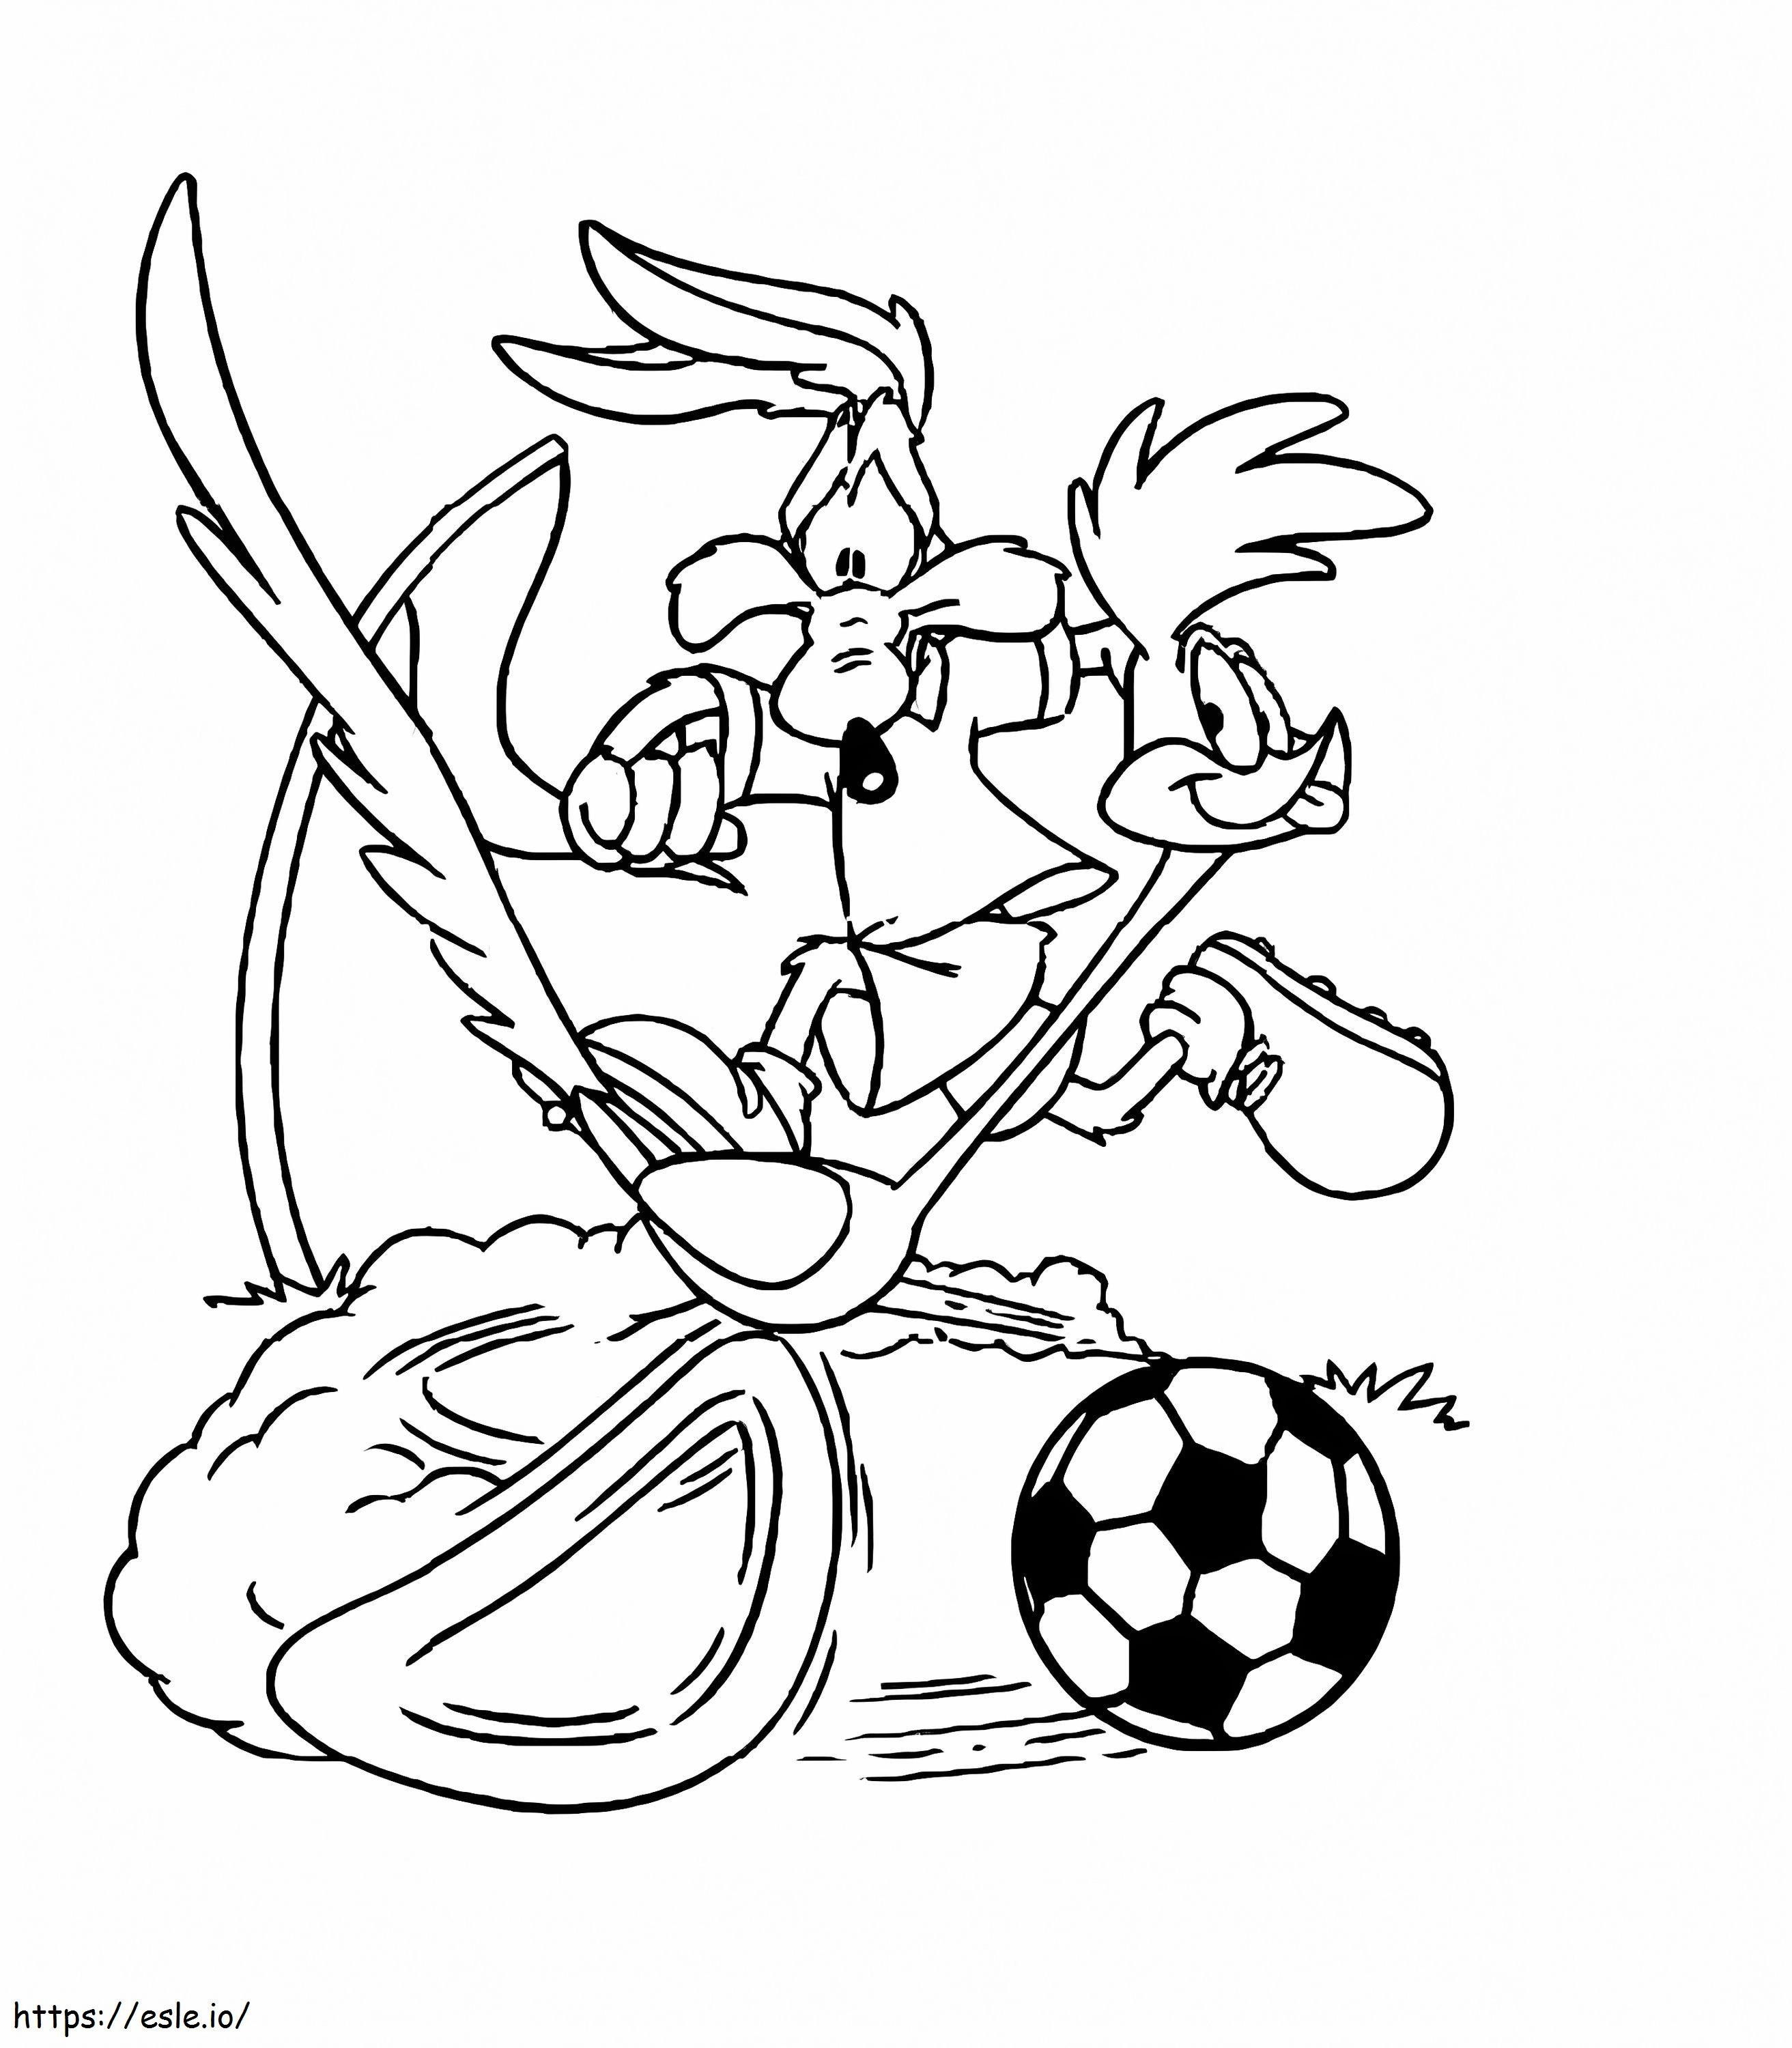 Road Runner e Wile E. Coyote jogam futebol para colorir